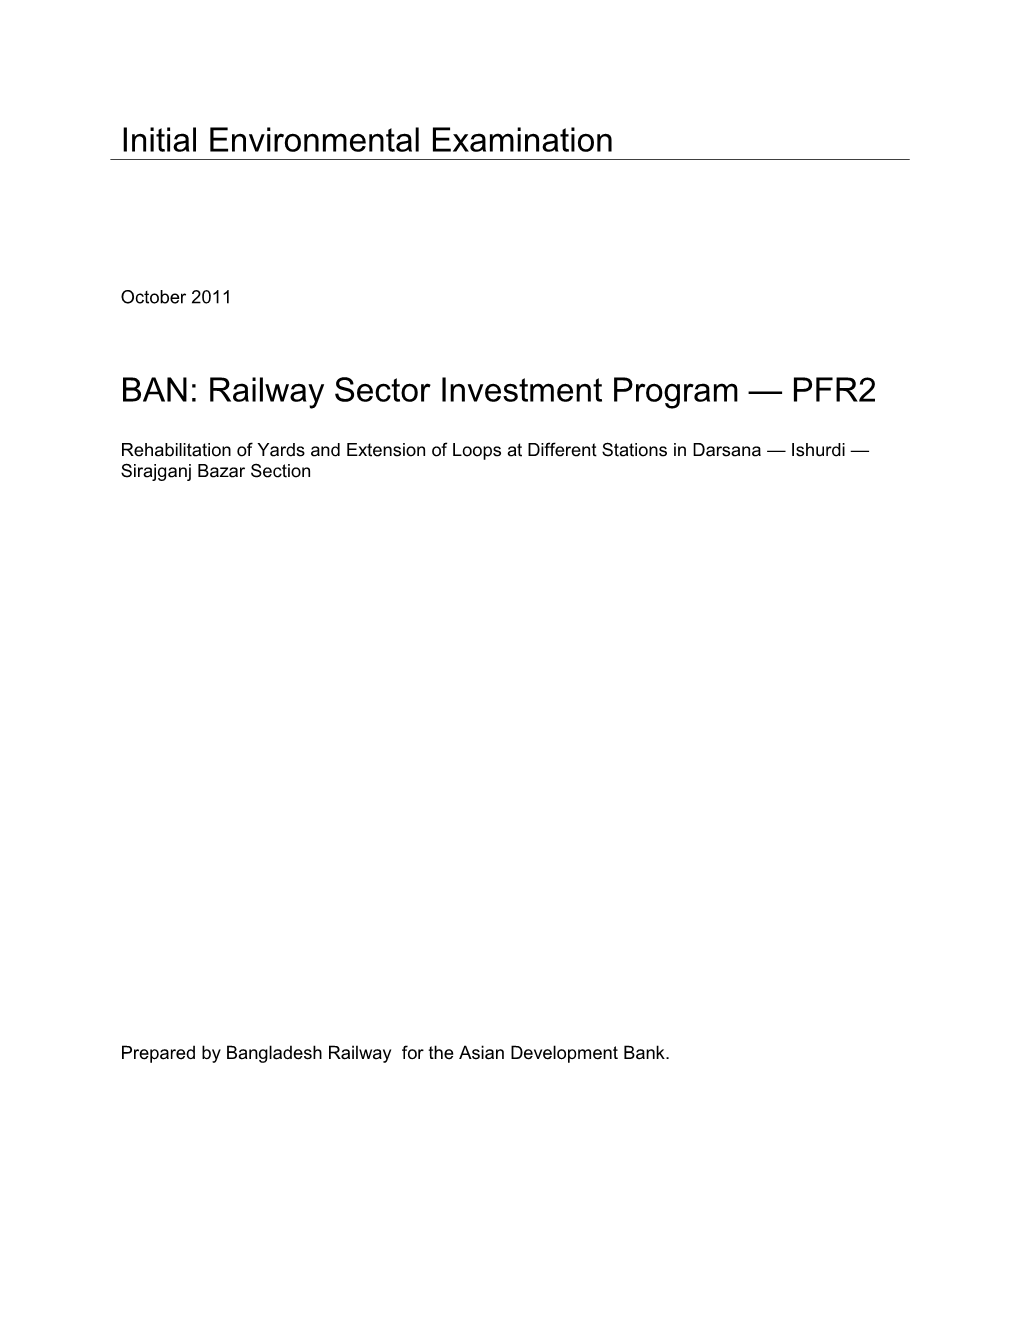 IEE: Bangladesh: Railway Sector Investment Program